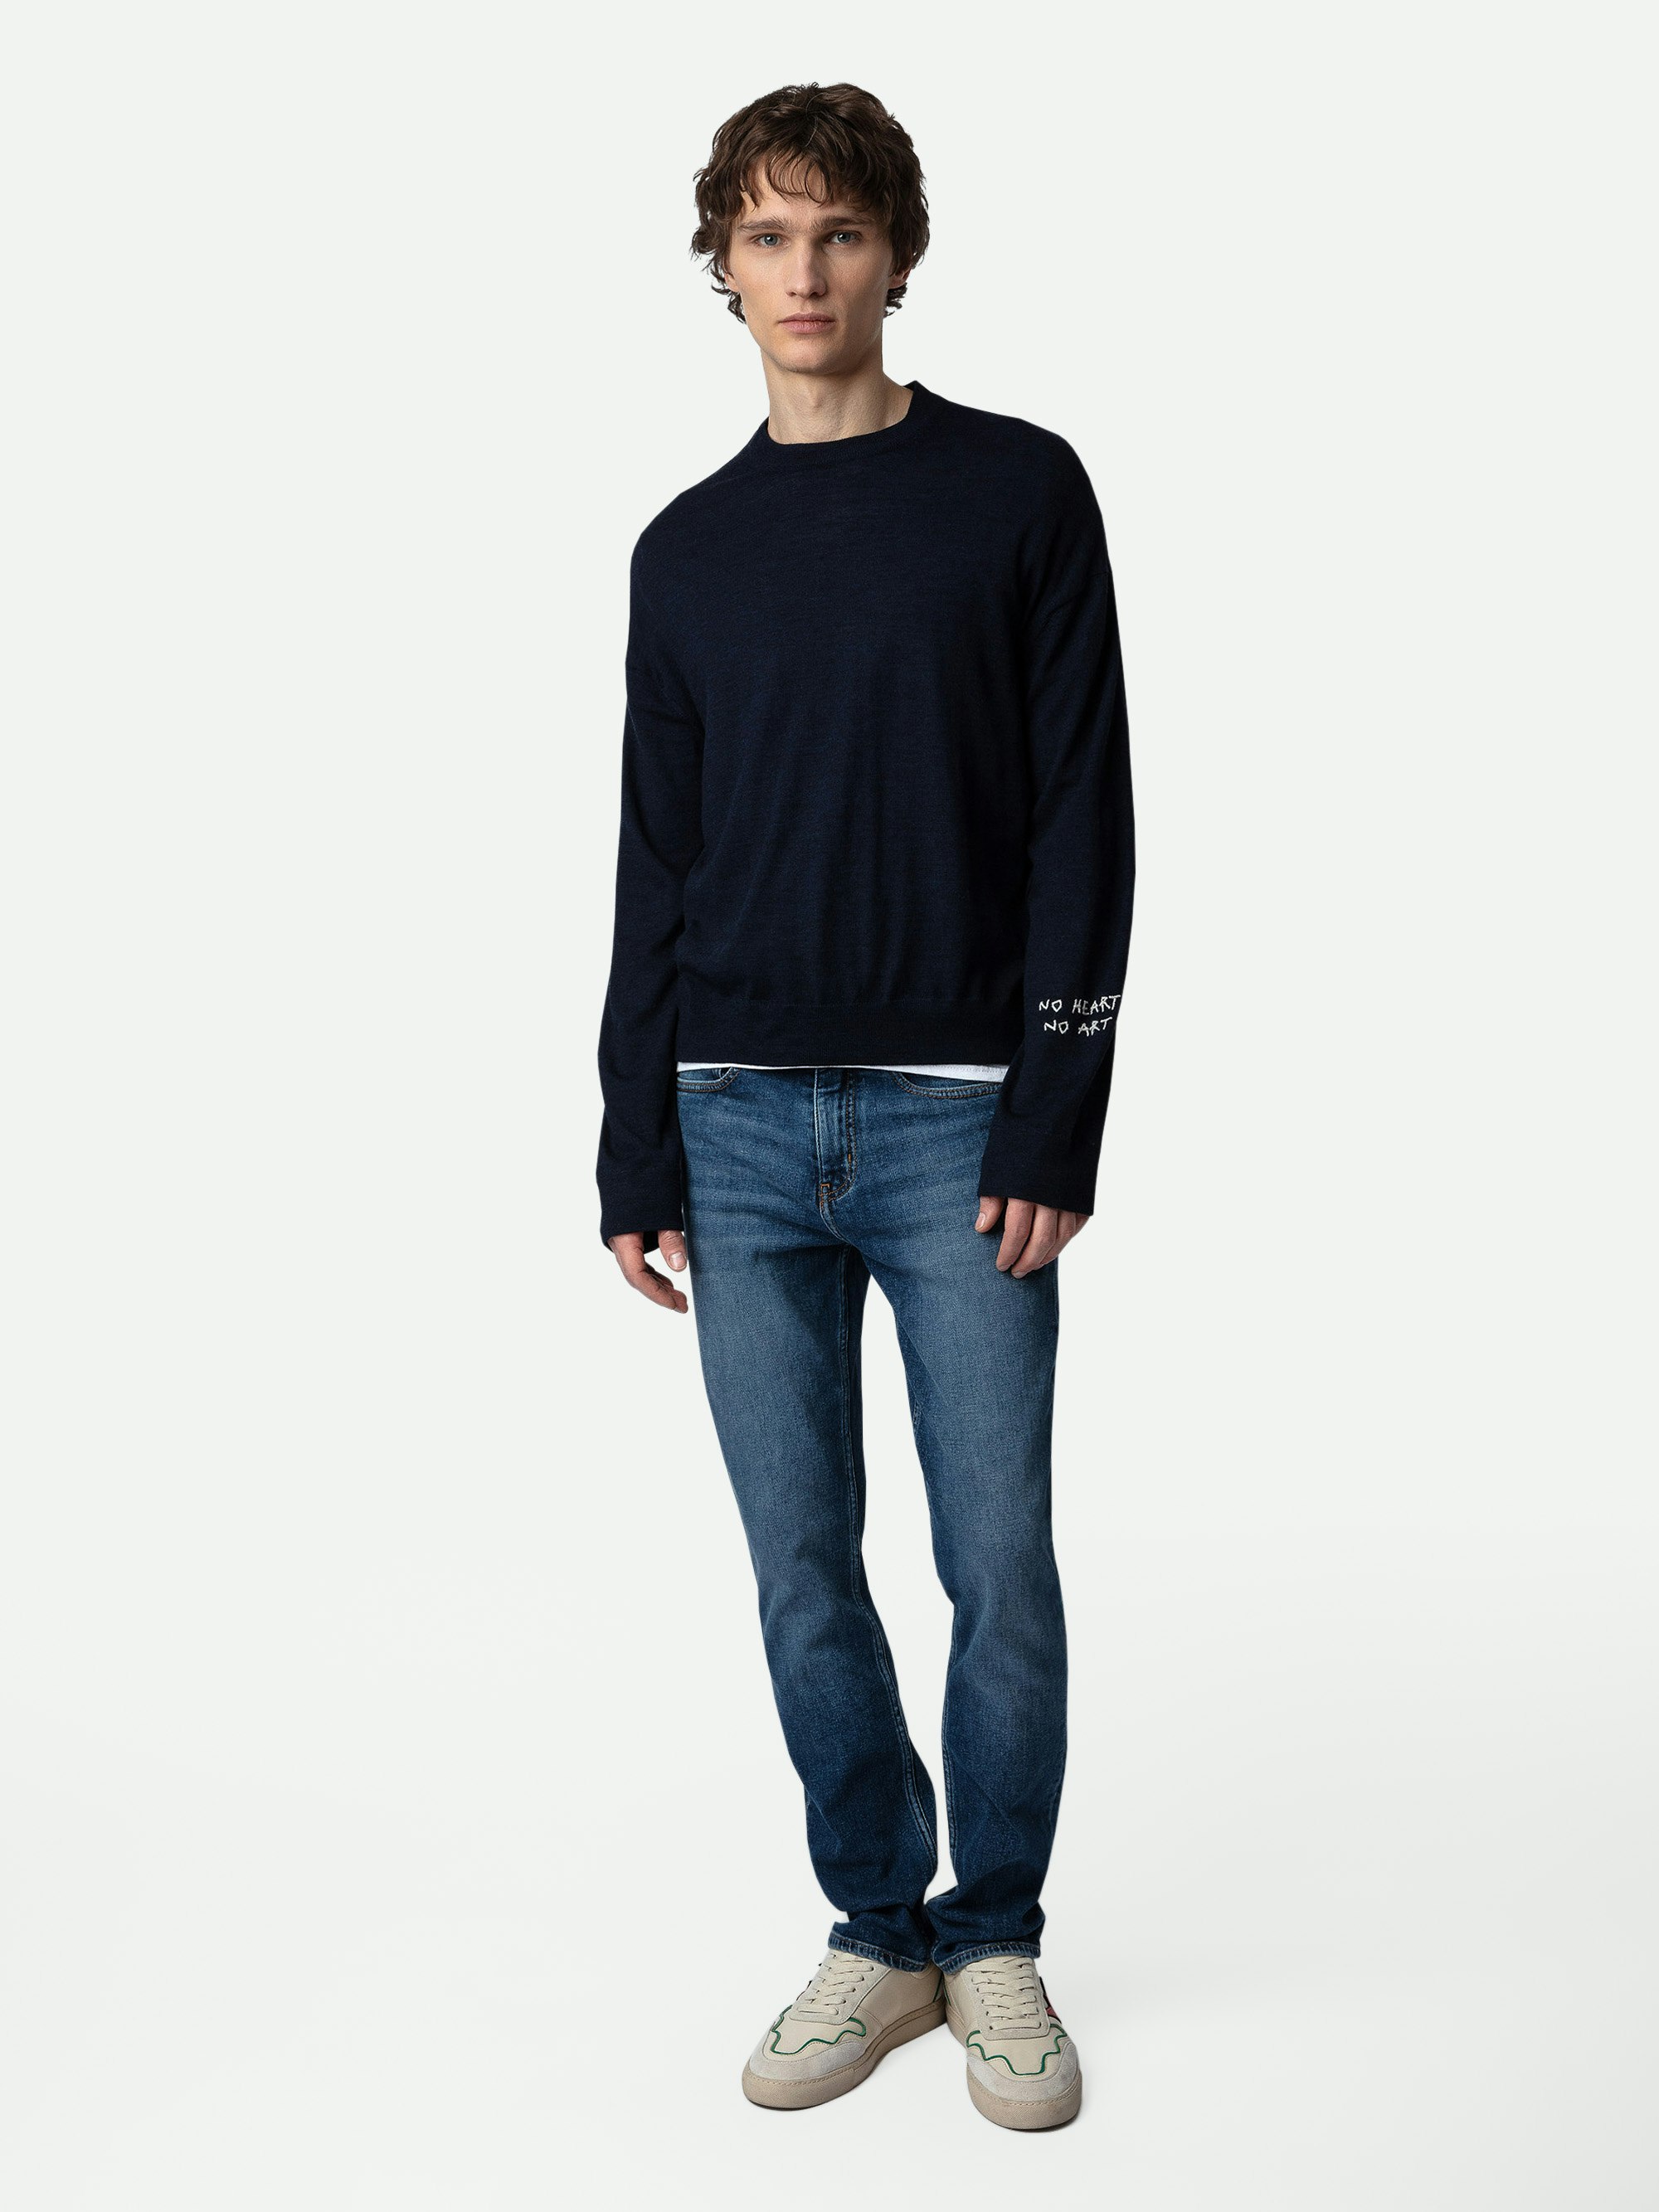 Marko Jumper 100% Merino Wool - Navy blue 100% merino wool jumper with “No Heart No Art” embroidery.